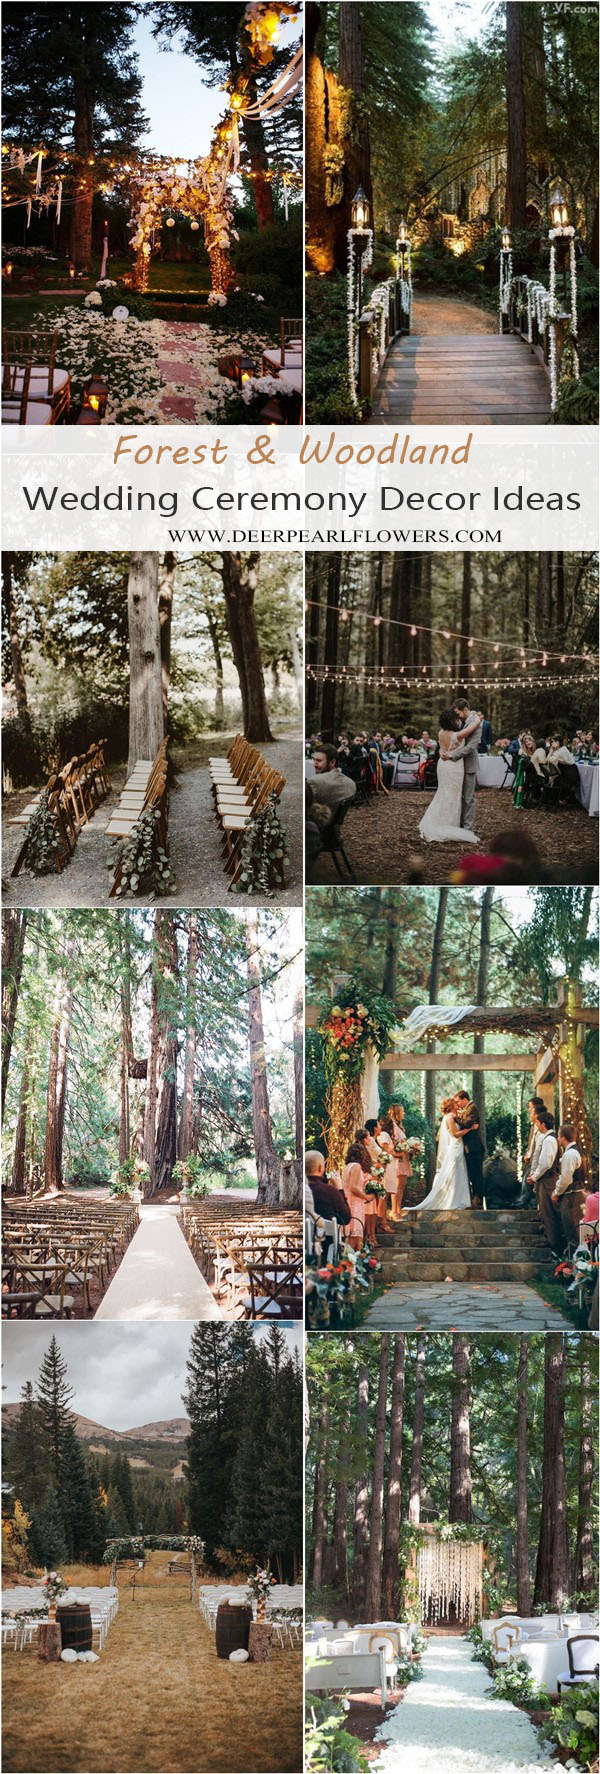 outdoor forest woodland wedding ceremony decor ideas